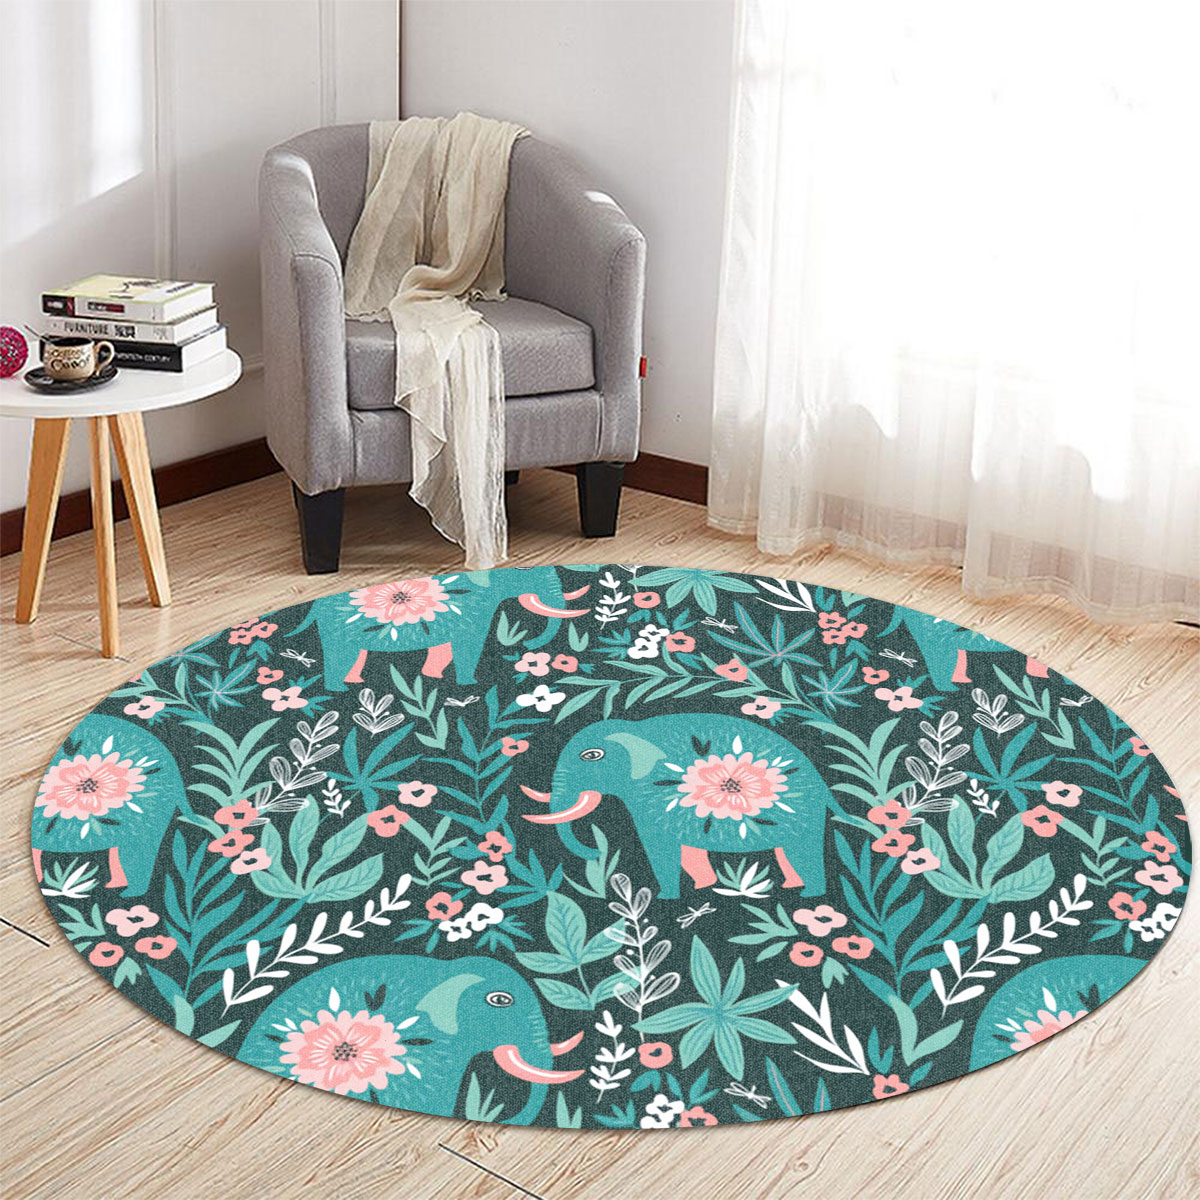 Flower Asian Elephant Round Carpet 6